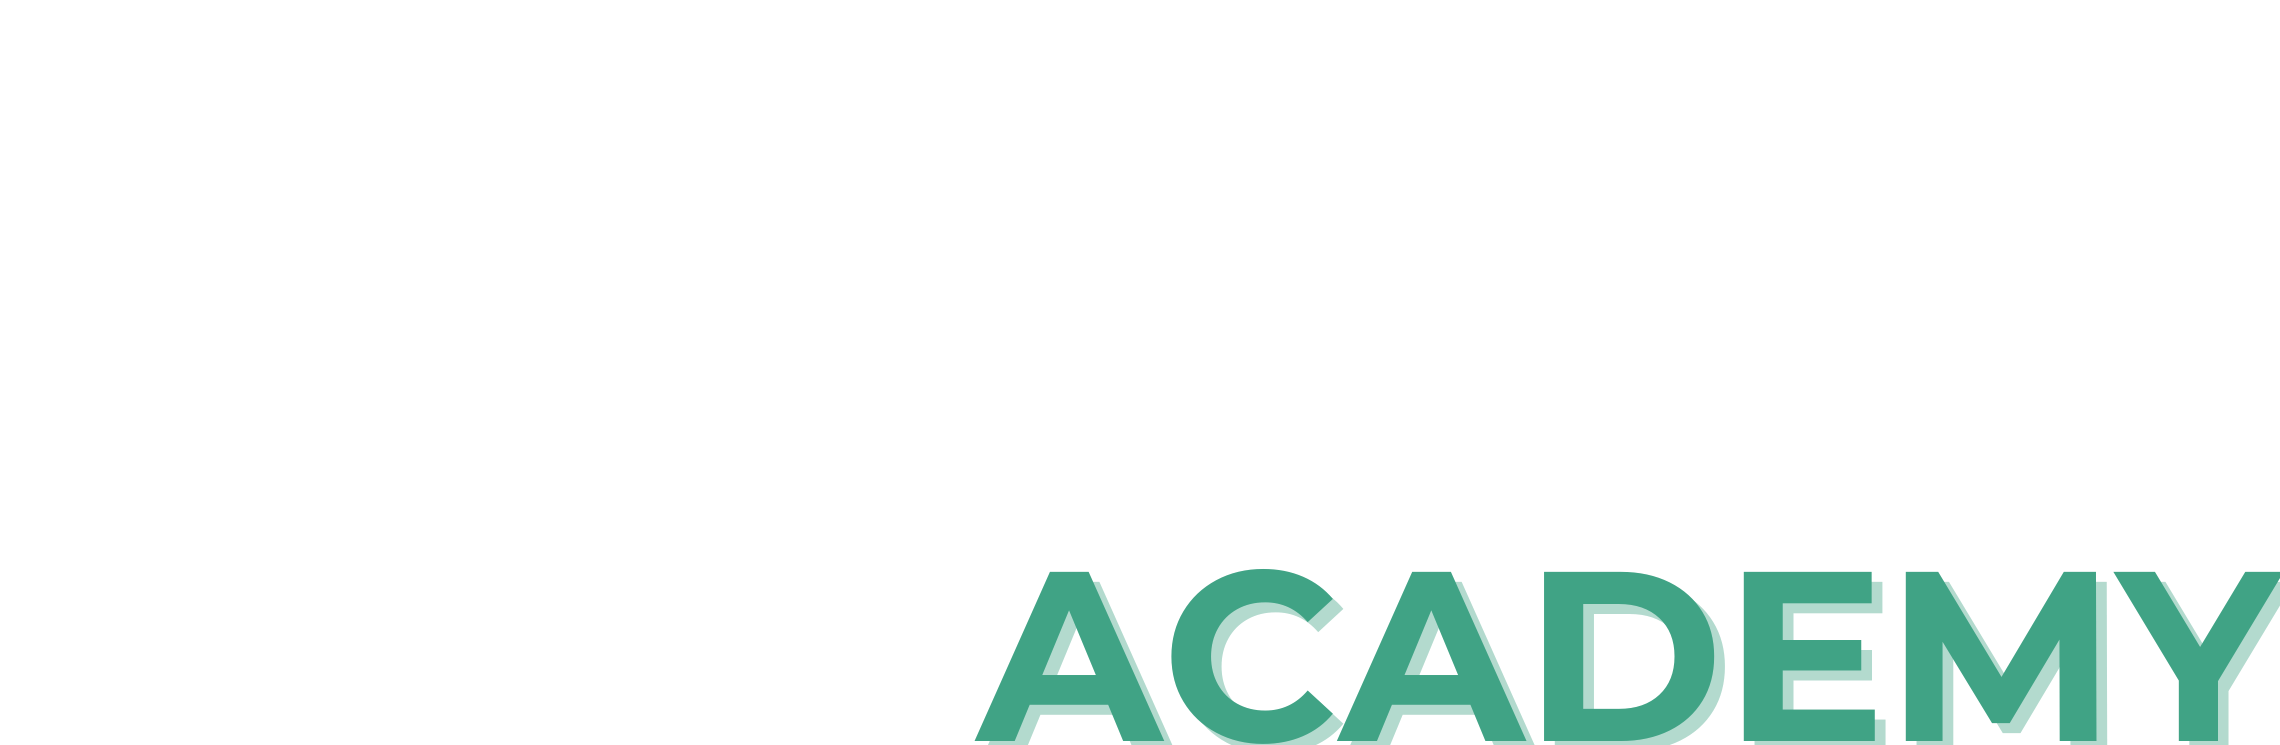 Geex Academy